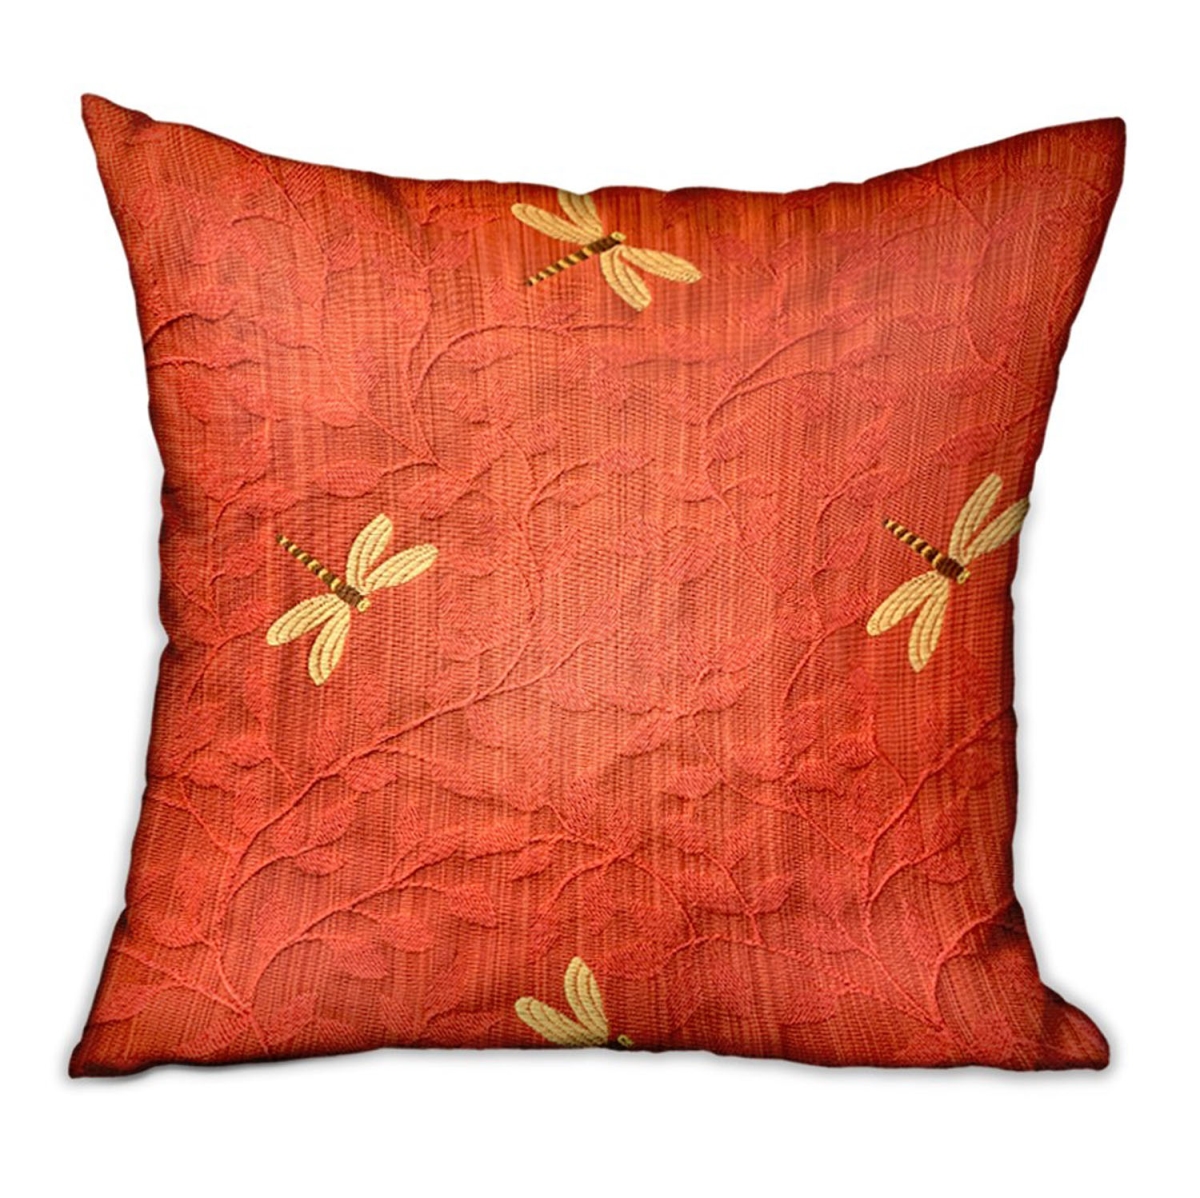 Pbdu1901-1818-dp 18 X 18 In. Firefly Red Animal Motif Luxury Throw Pillow